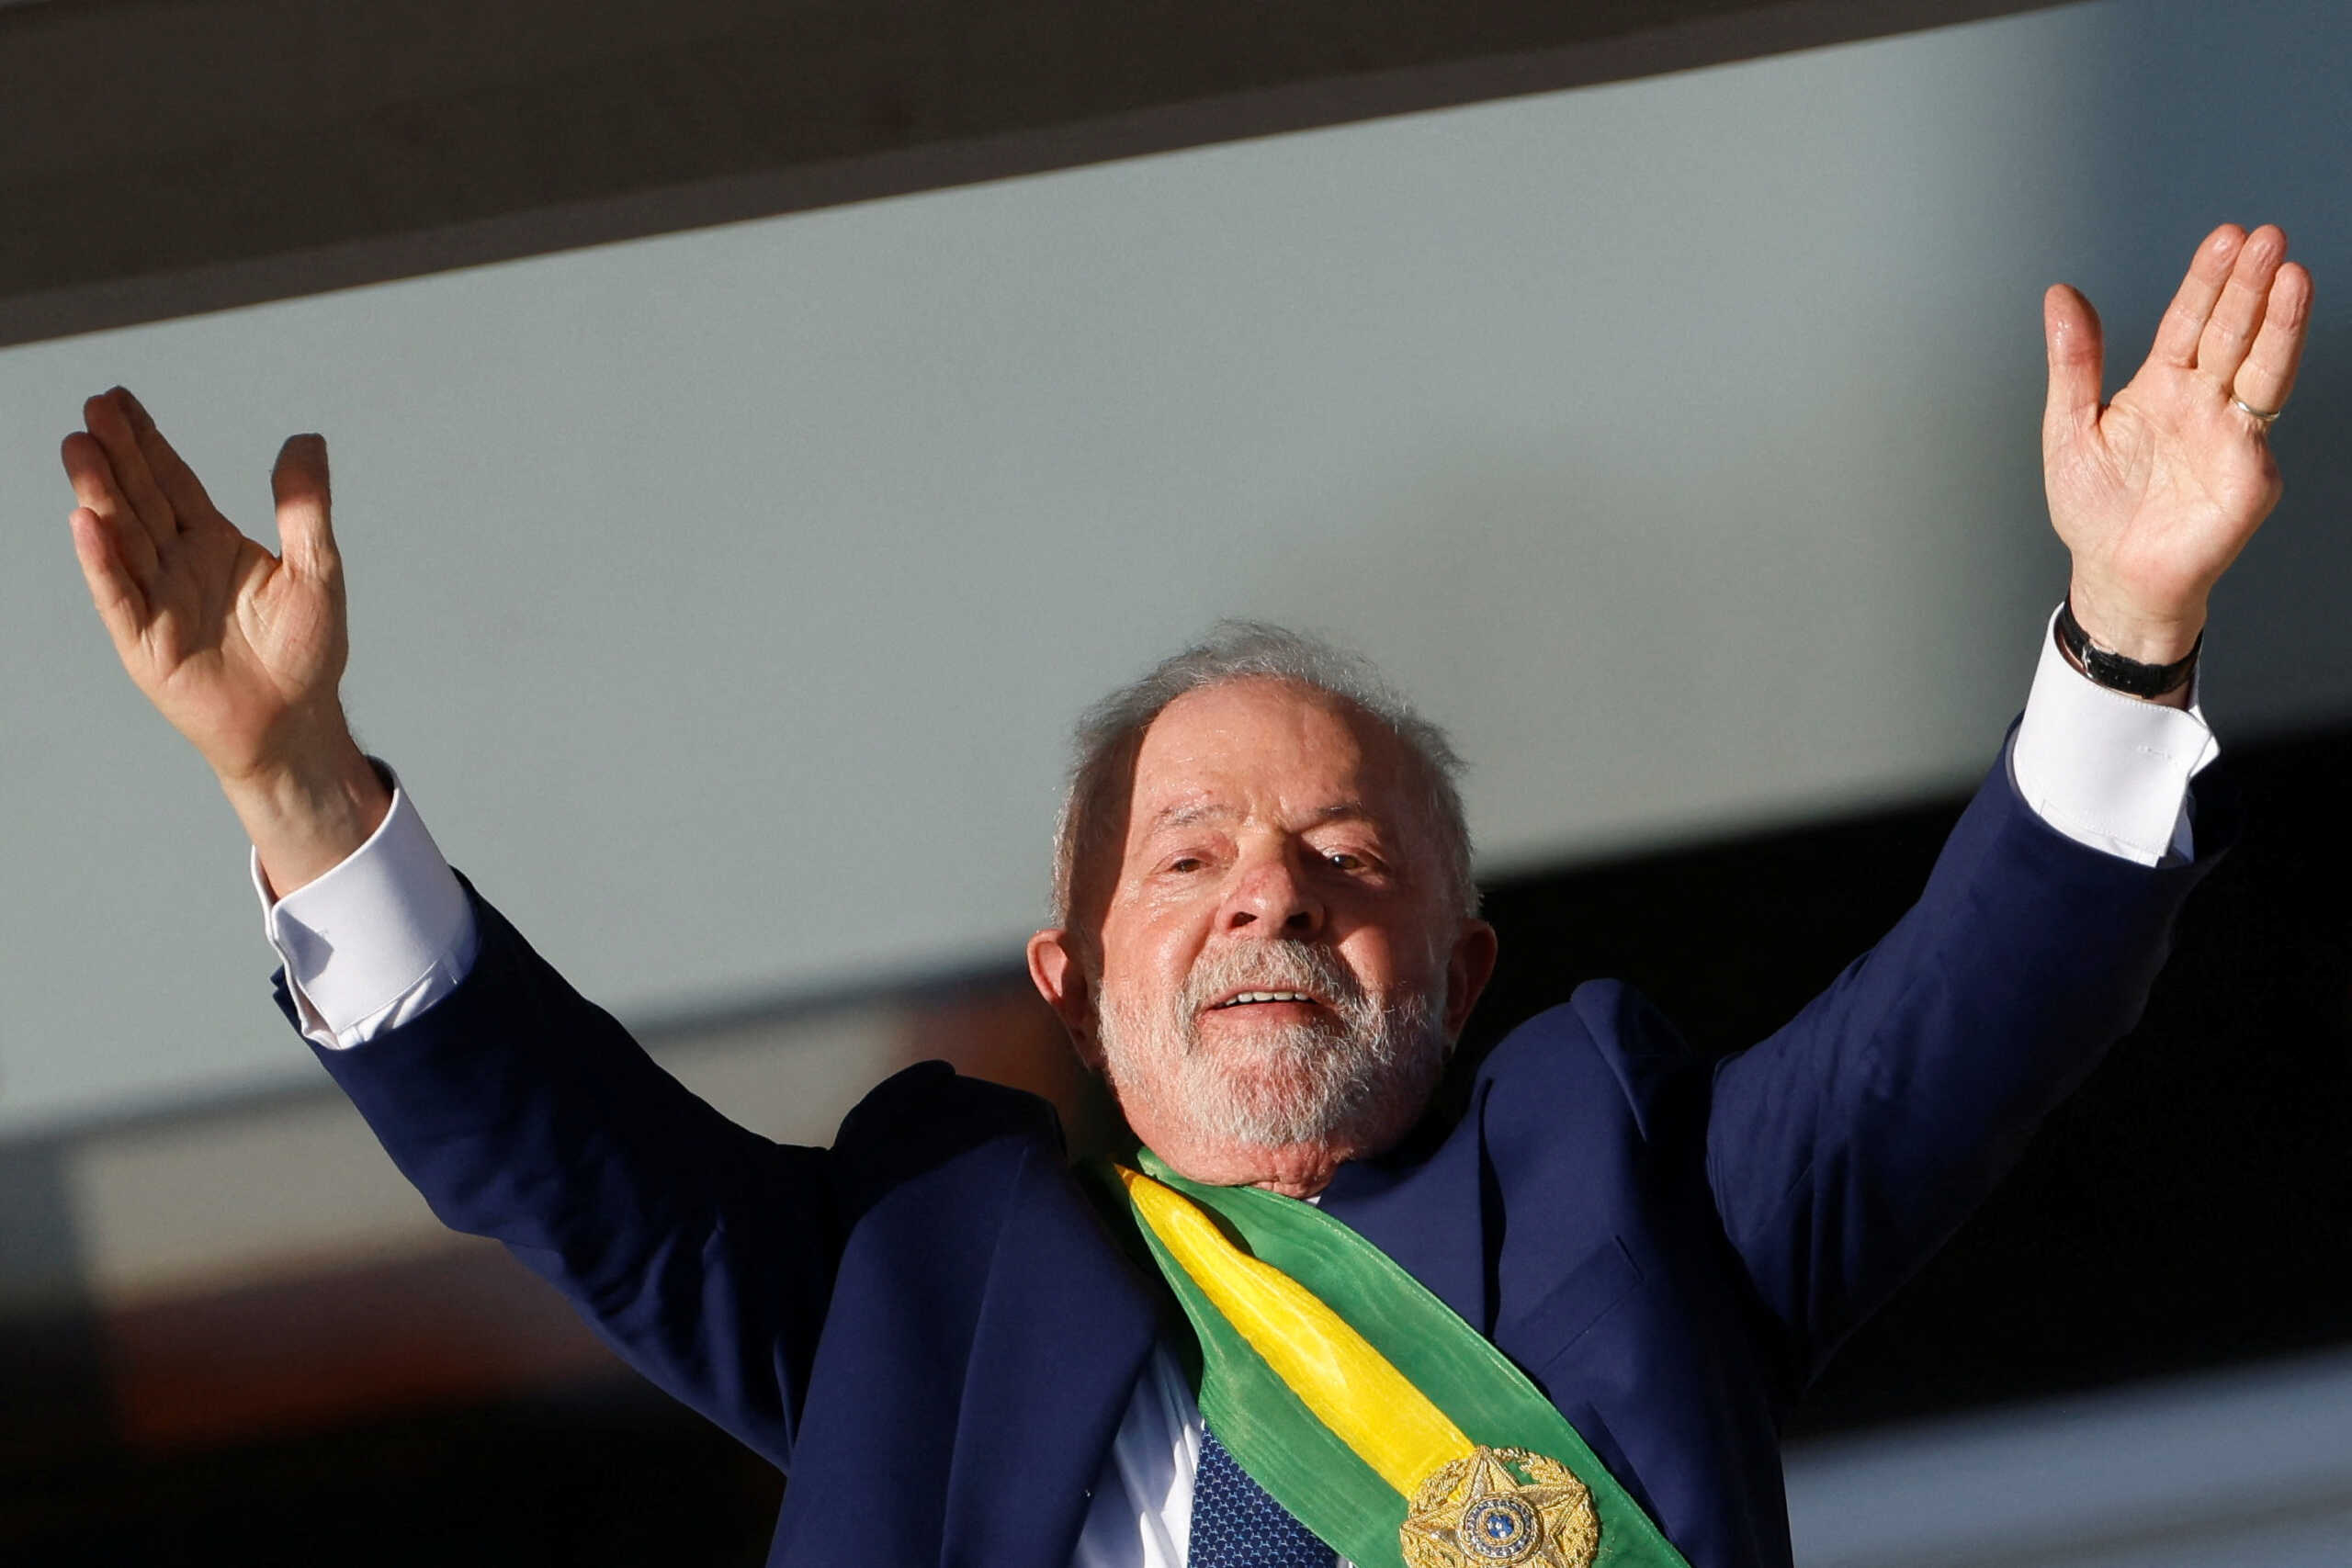 O Λούλα προτείνει η Ουκρανία να εκχωρήσει την Κριμαία στη Ρωσία για να τερματιστεί ο πόλεμος